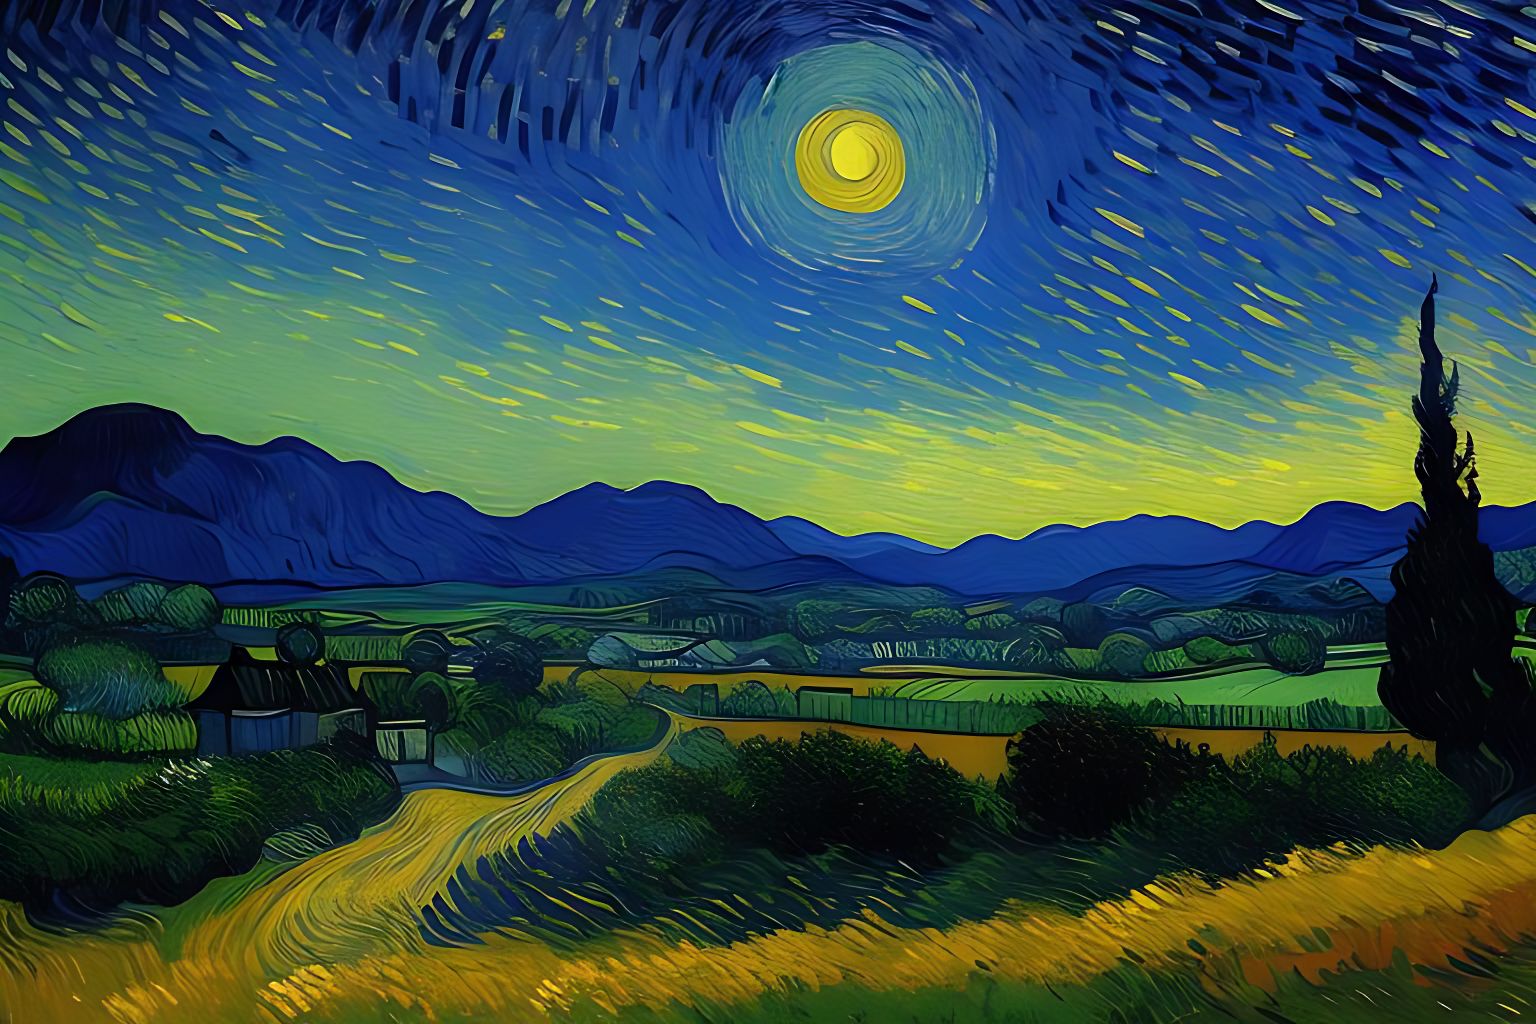 dnb: Landscape at Twilight by Vincent van Gogh